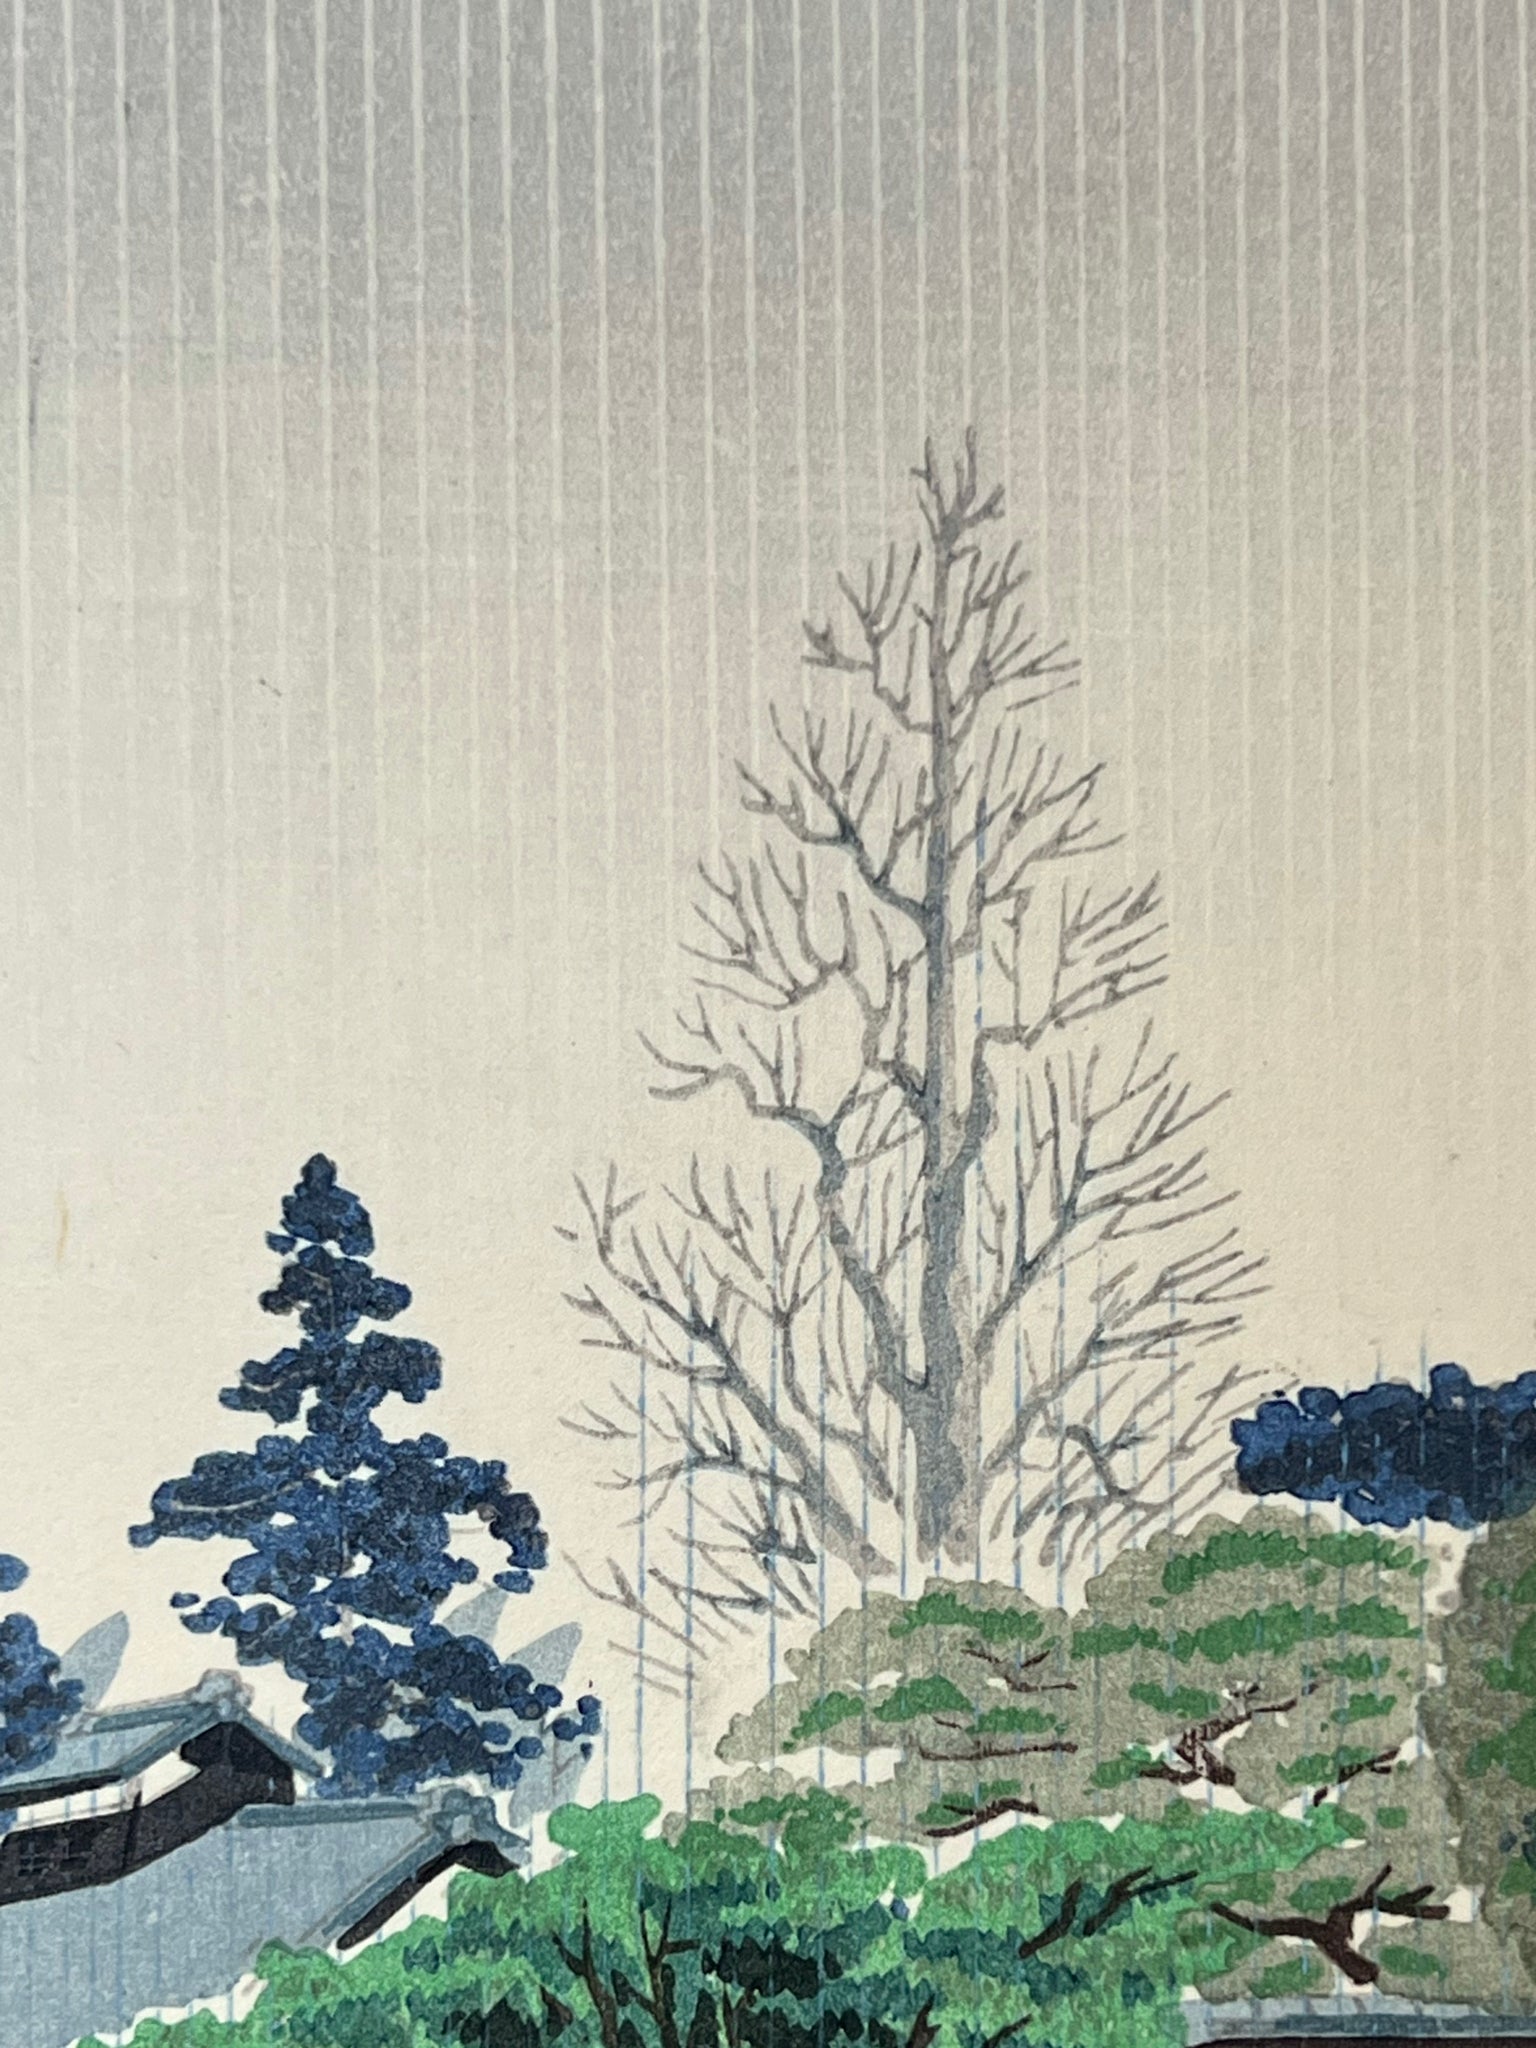 Estampe Japonaise de Tokuriki Tomikichiro | Série des 12 mois à Kyoto, juin, sado senke pluie